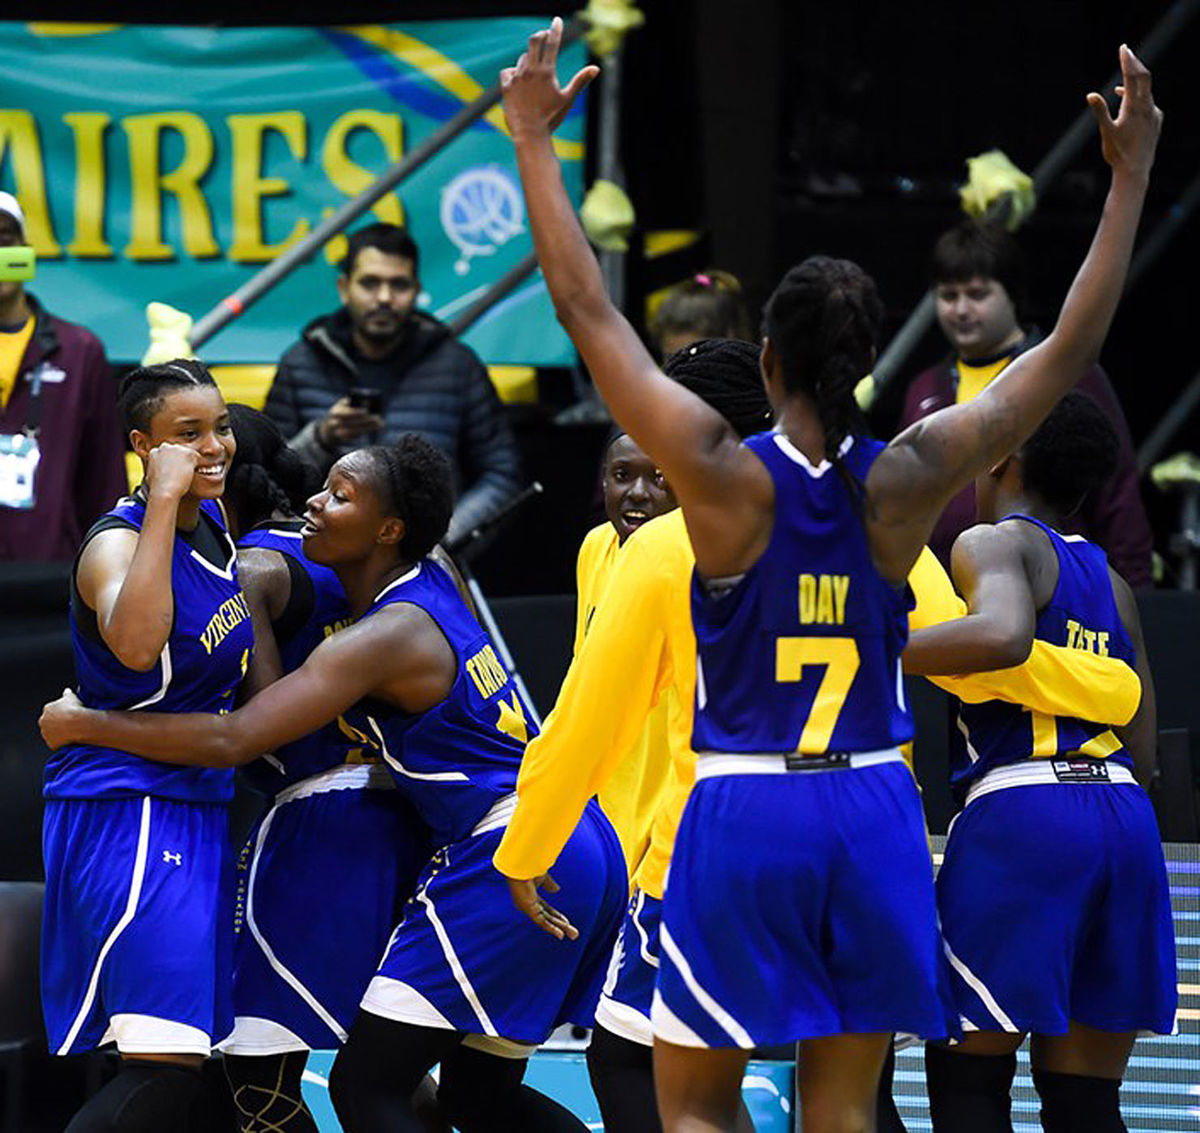 Virgin Islands Women's Basketball Team Shocks The World With 67-60 Overtime Win Over Brazil In FIBA AmeriCup Championships